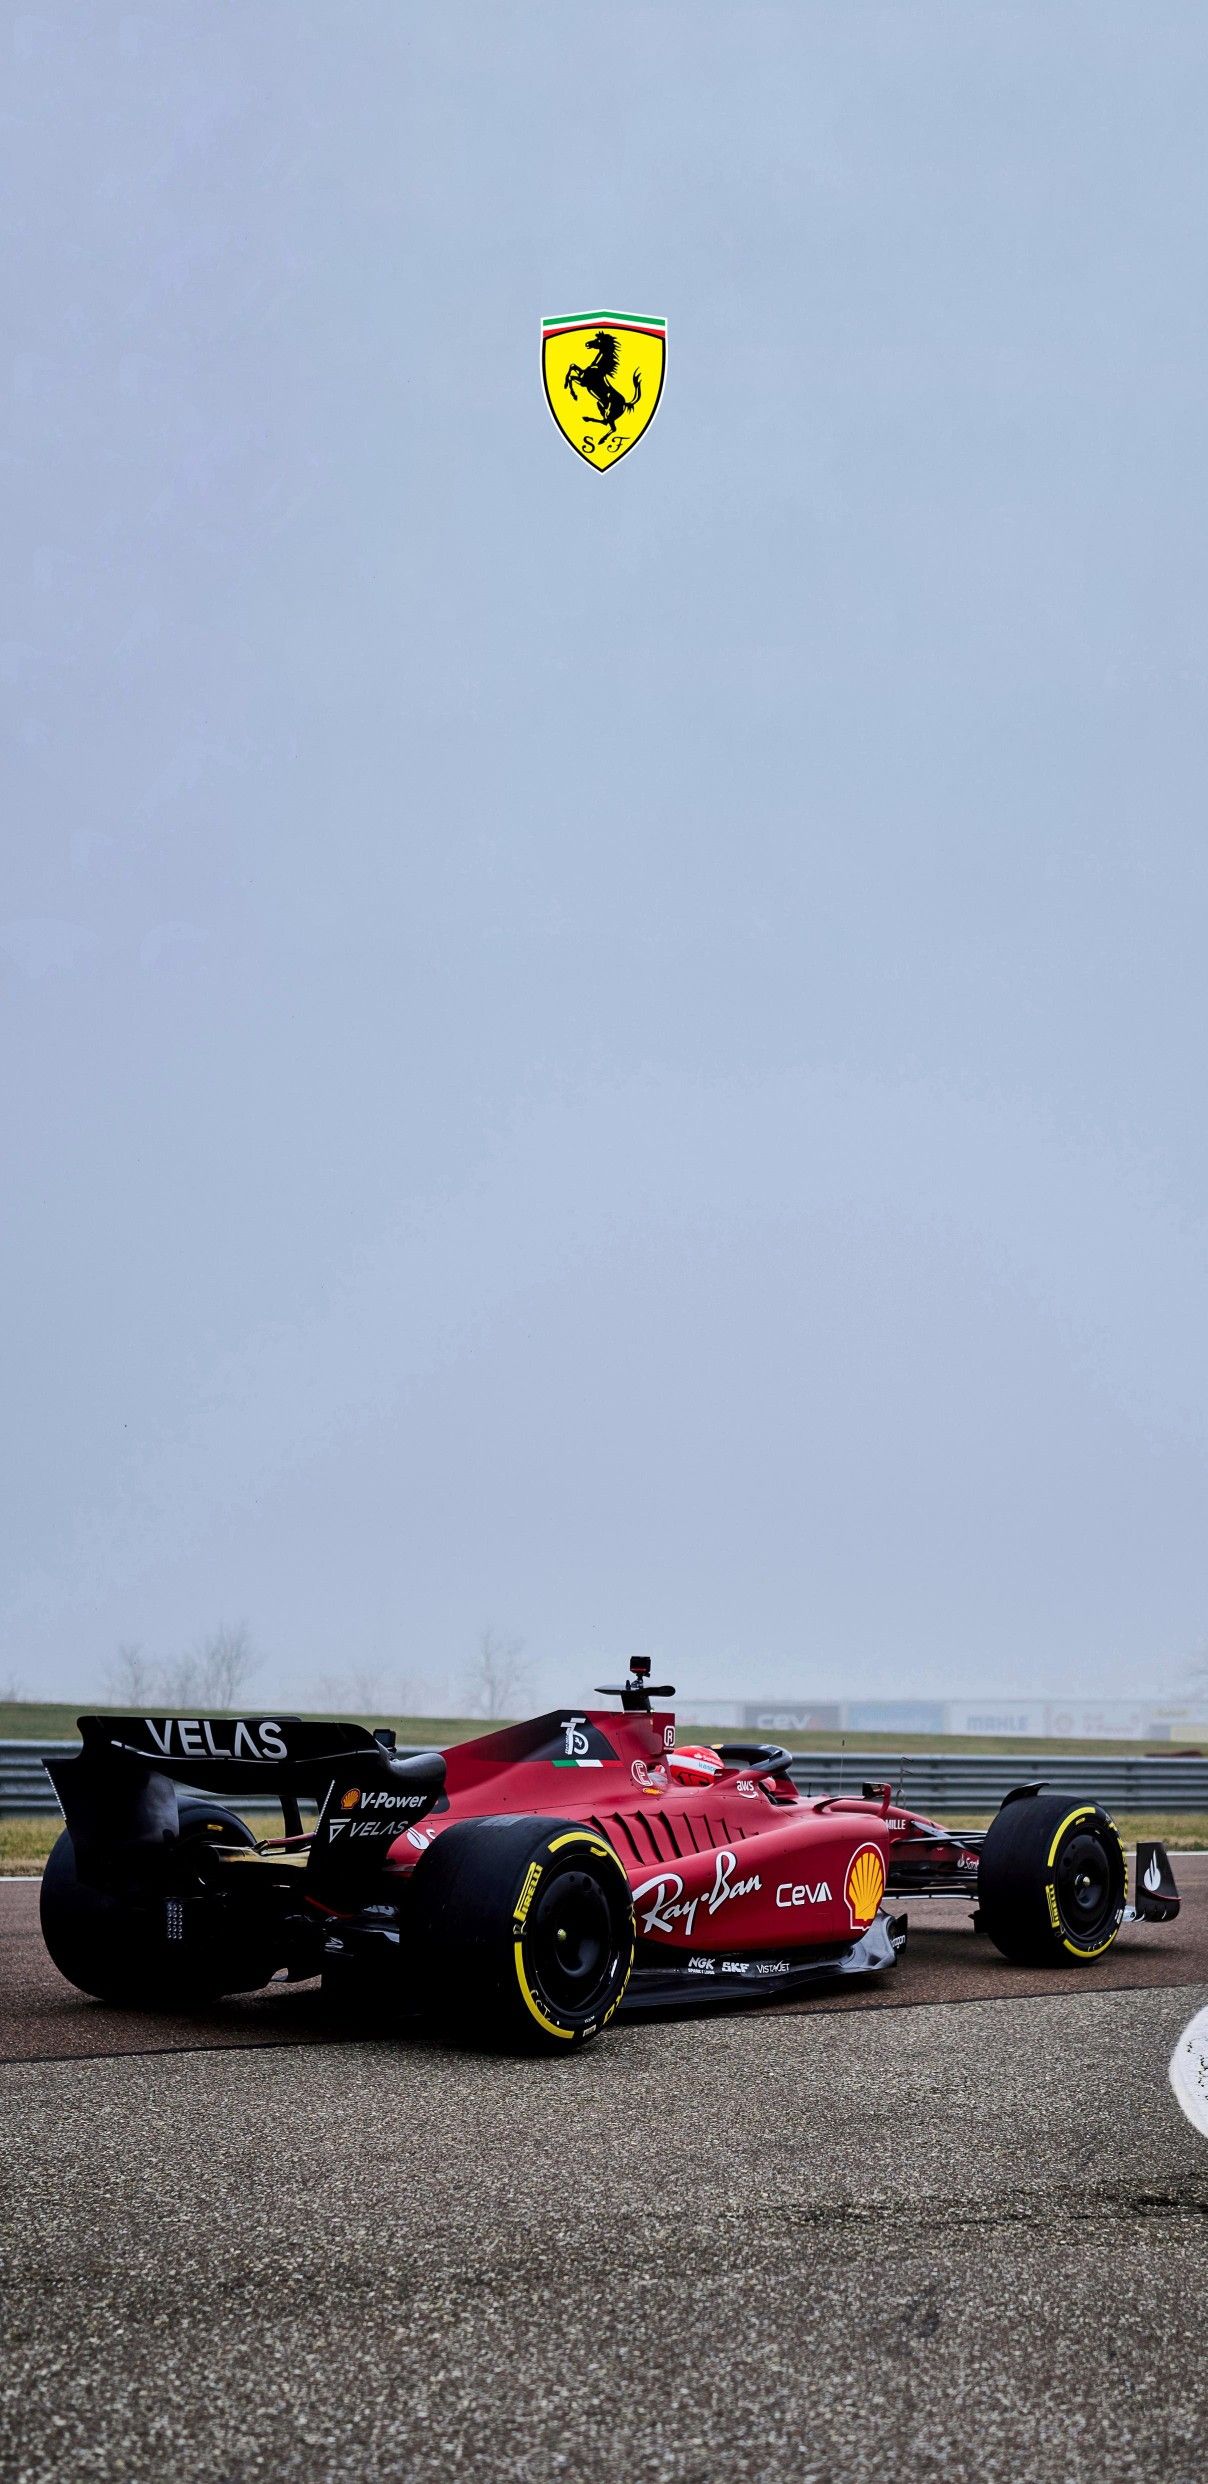 F1 Charles Leclerc 2022 Ferrari Phone Background. Formula 1 car racing, Ferrari poster, Formula 1 car